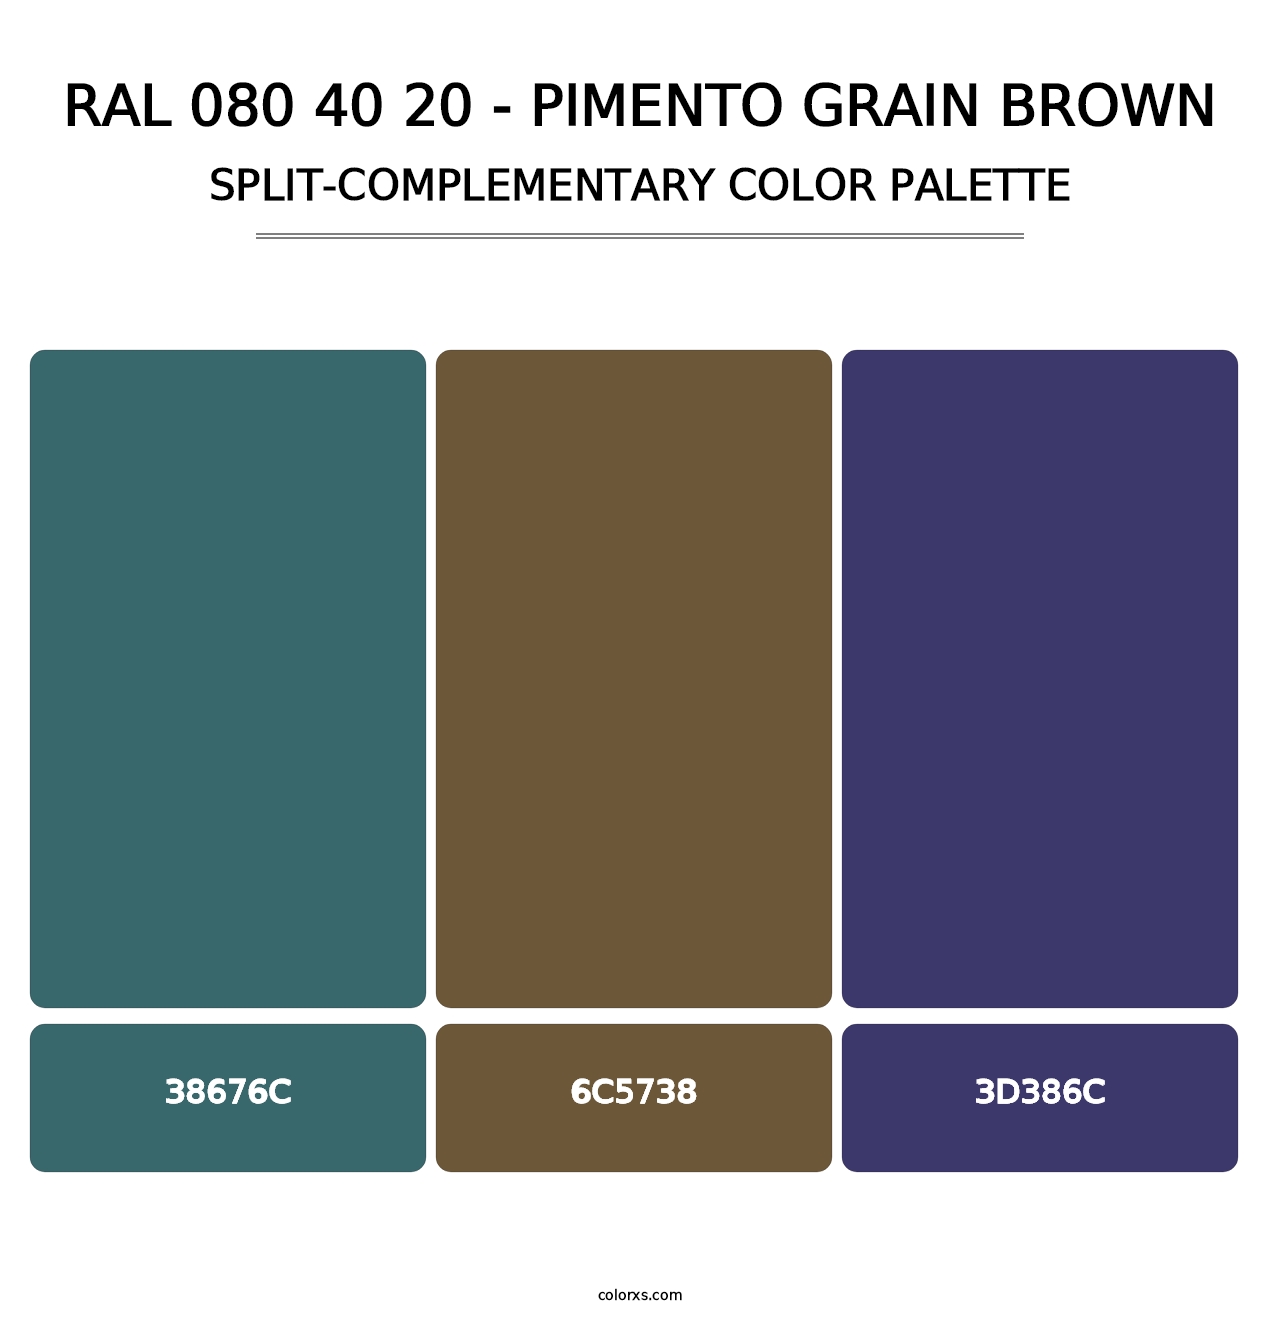 RAL 080 40 20 - Pimento Grain Brown - Split-Complementary Color Palette